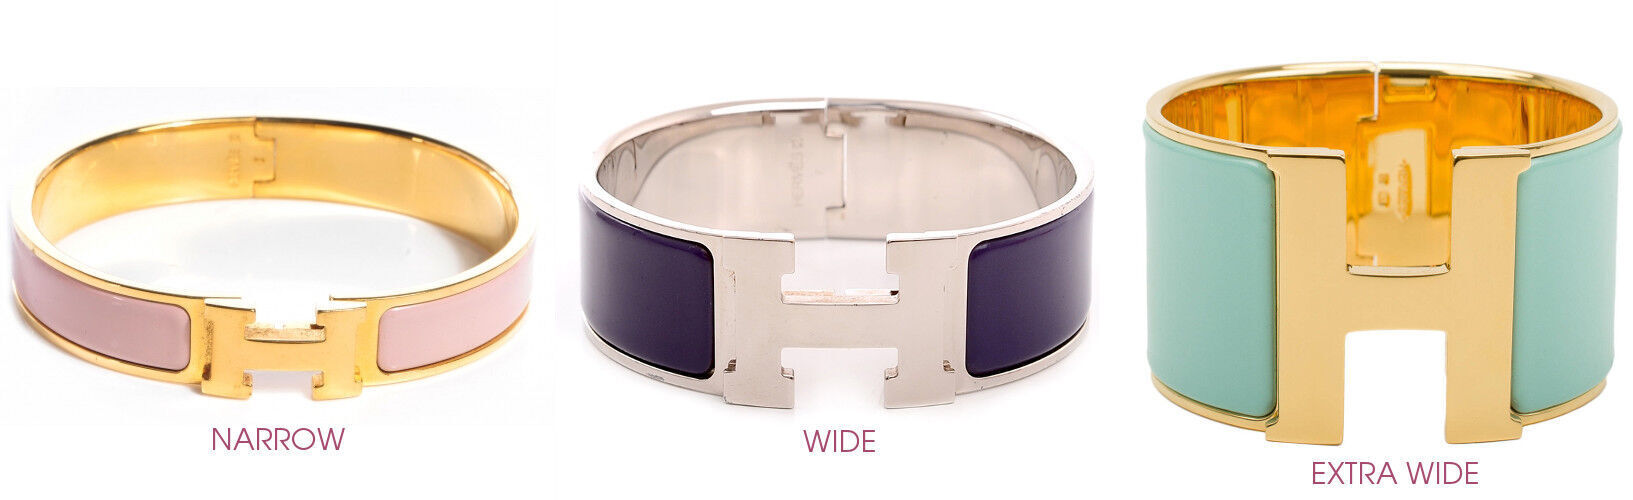 hermes-clic-clac-bracelet-narrow-wide-different-sizes.jpg